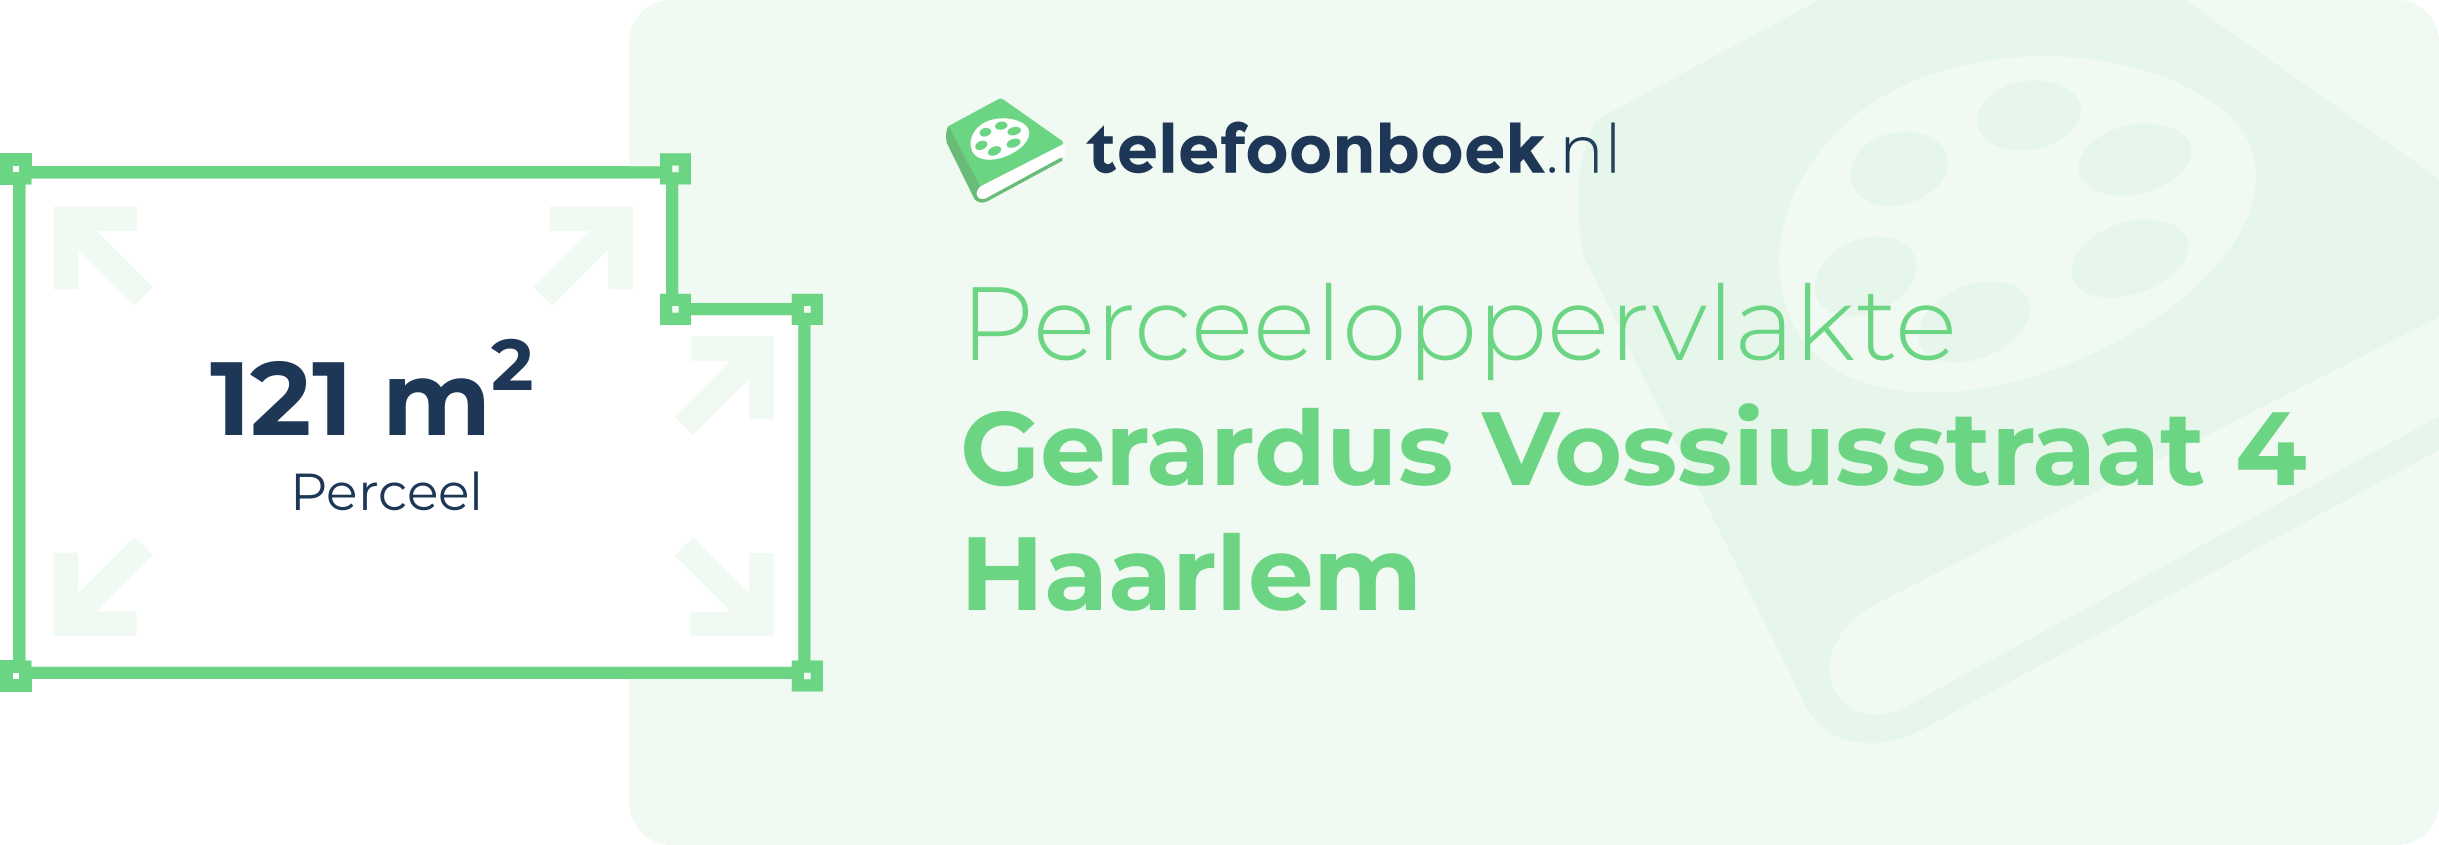 Perceeloppervlakte Gerardus Vossiusstraat 4 Haarlem